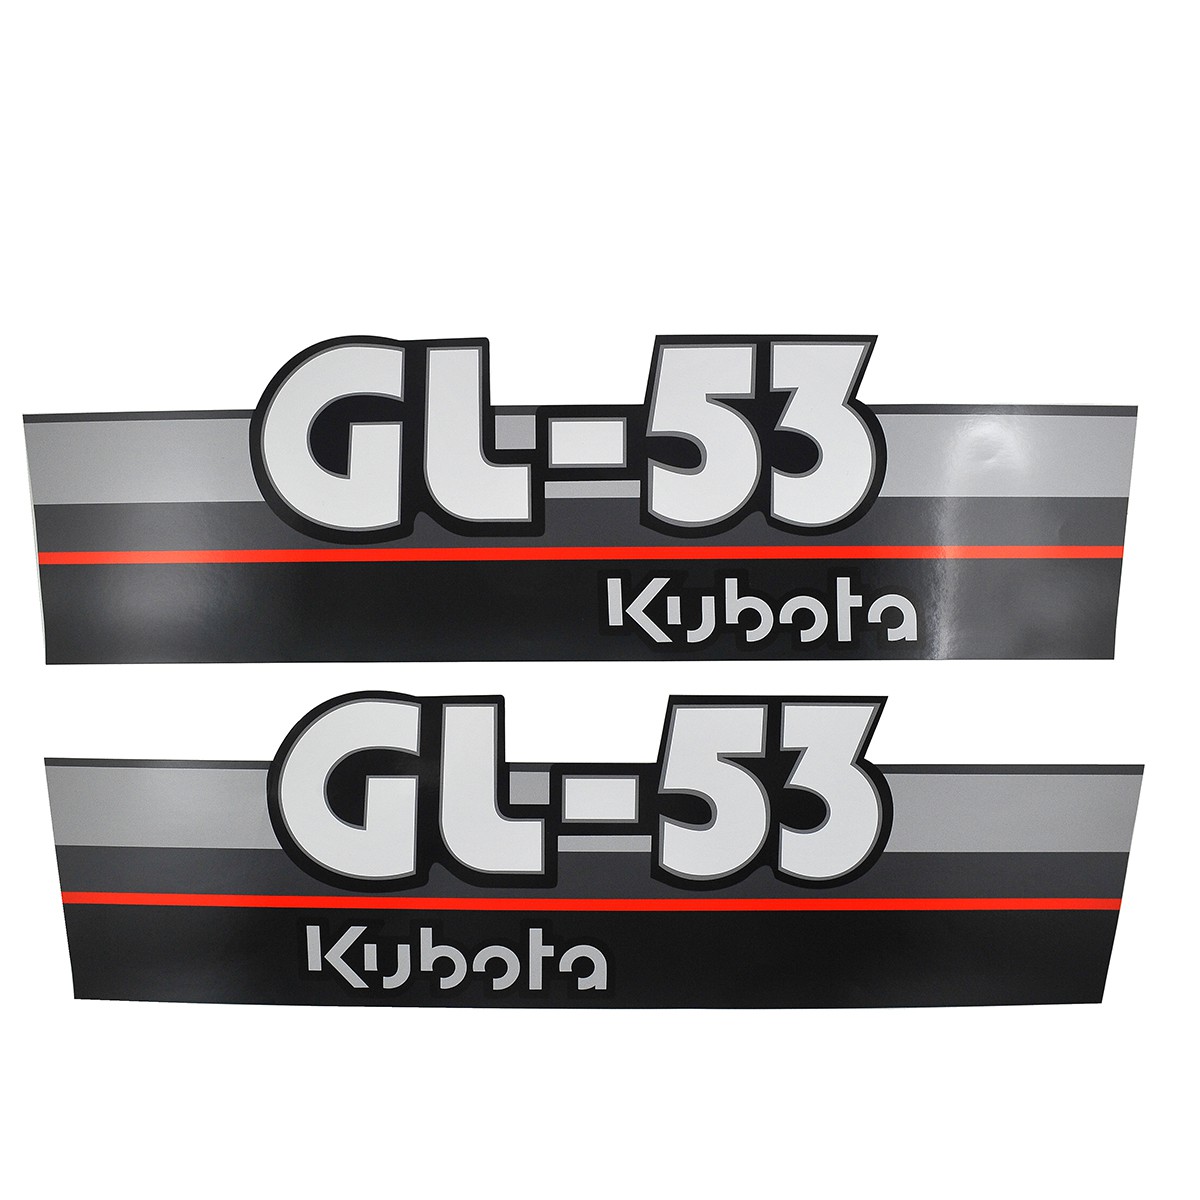 Kubota GL53 stickers